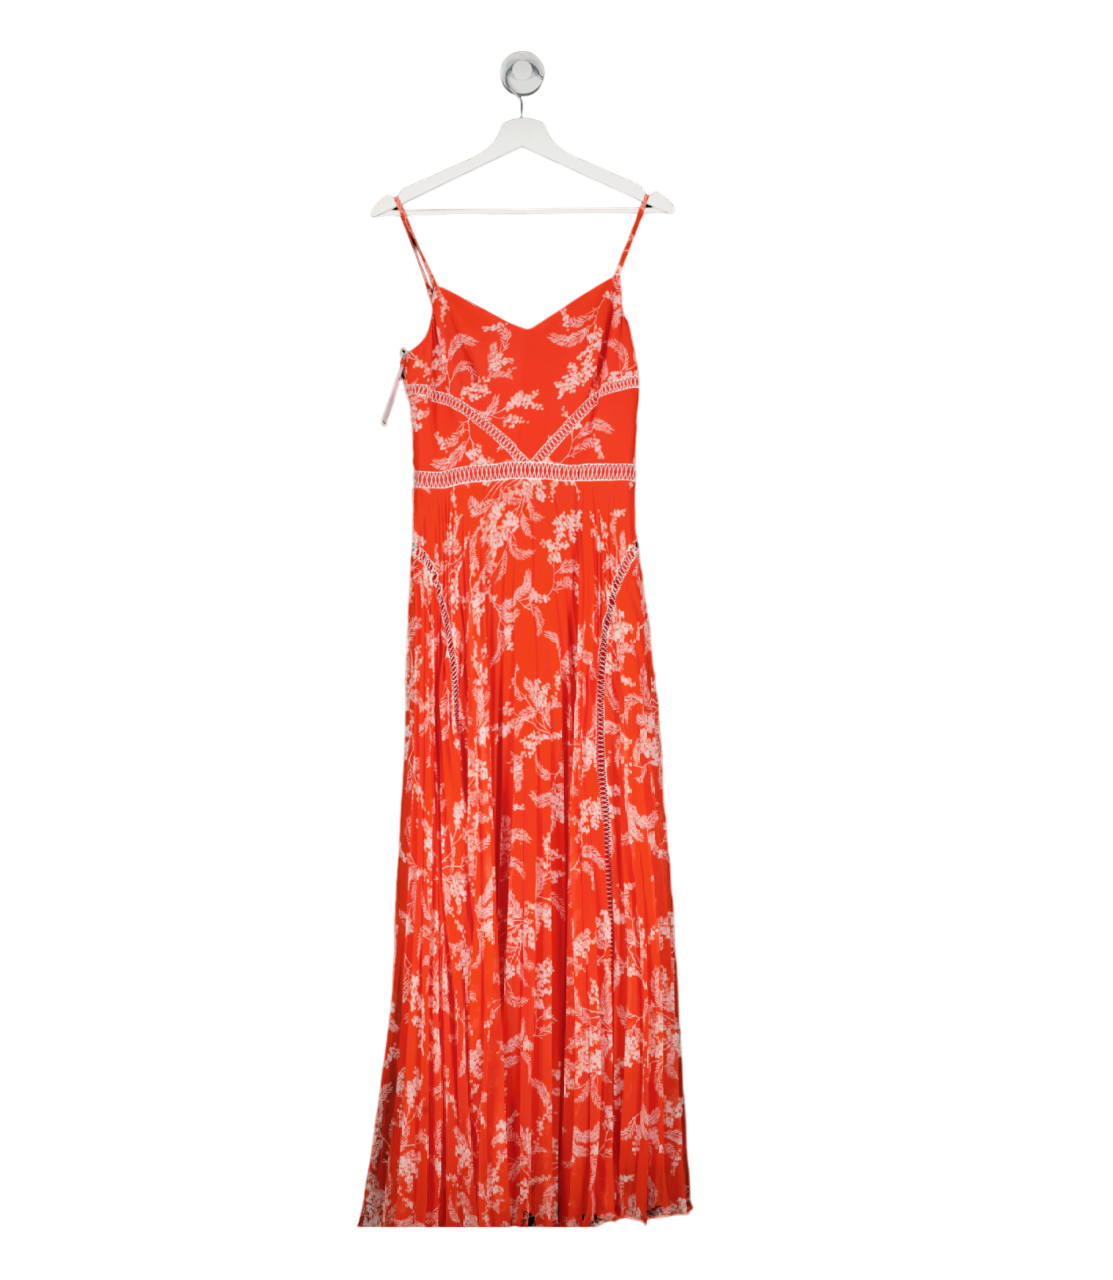 Karen Millen Orange Floral Dress UK 8